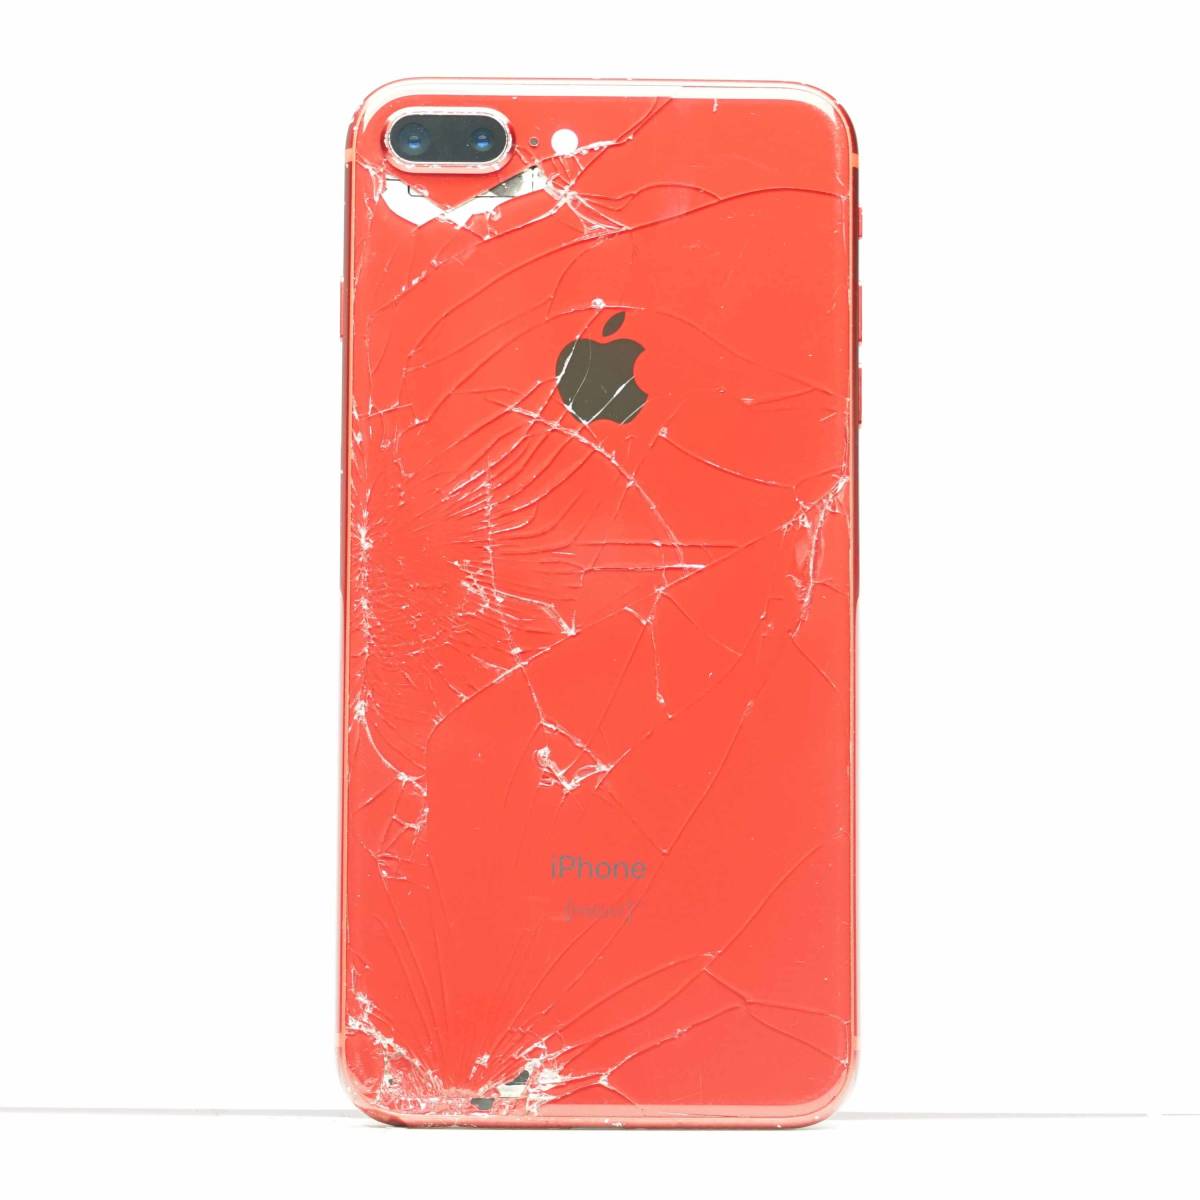 iPhone 8 Plus 64GB (PRODUCT)RED MRTL2J/A SIMフリー 訳あり品 中古